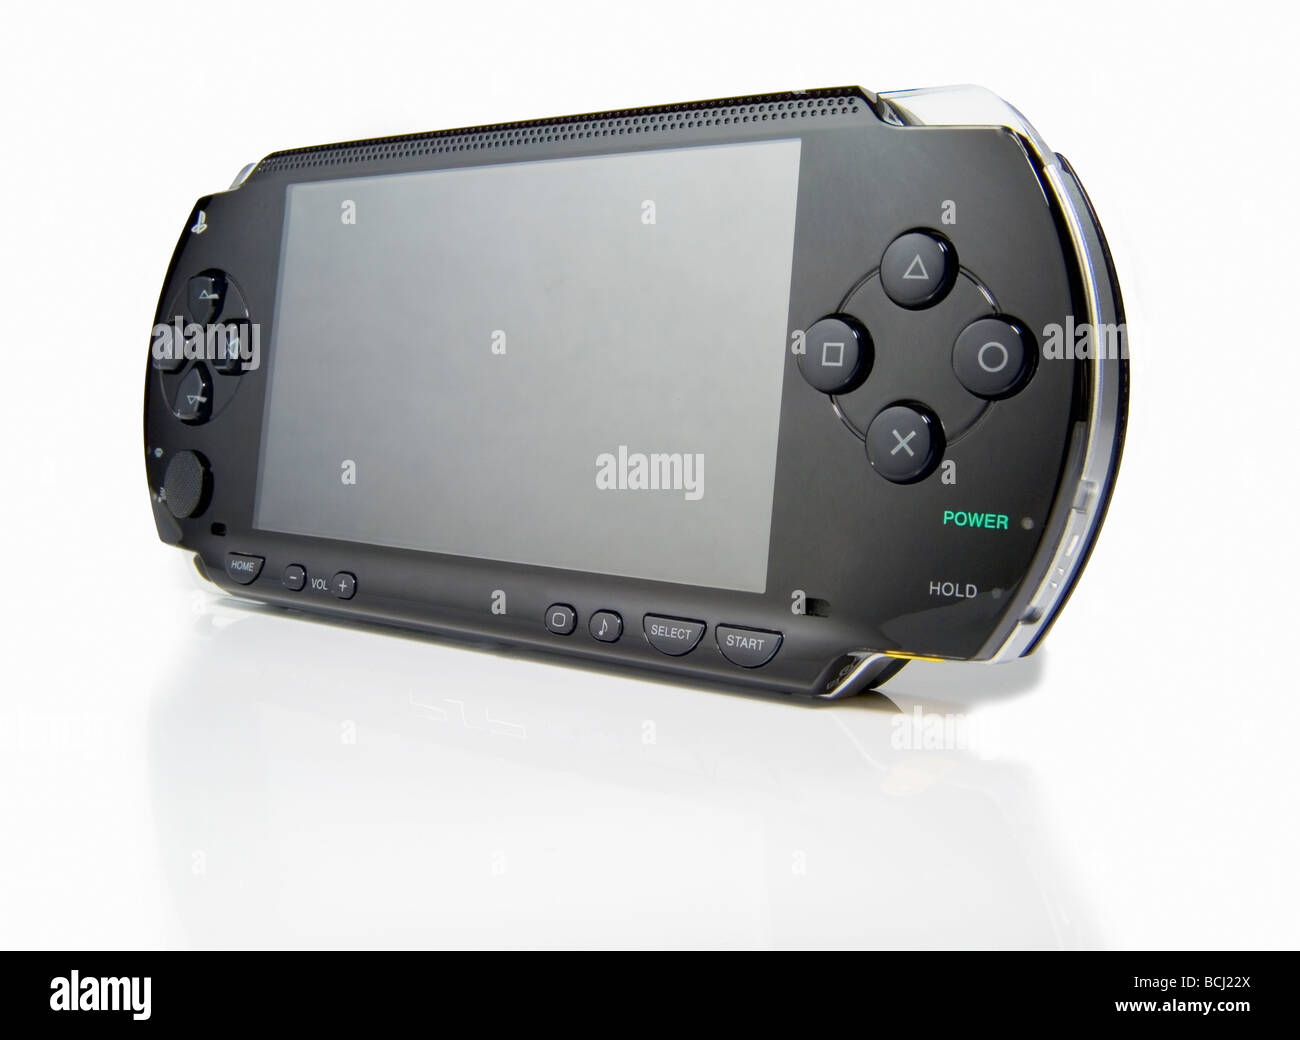 Sony PSP Stock Photo